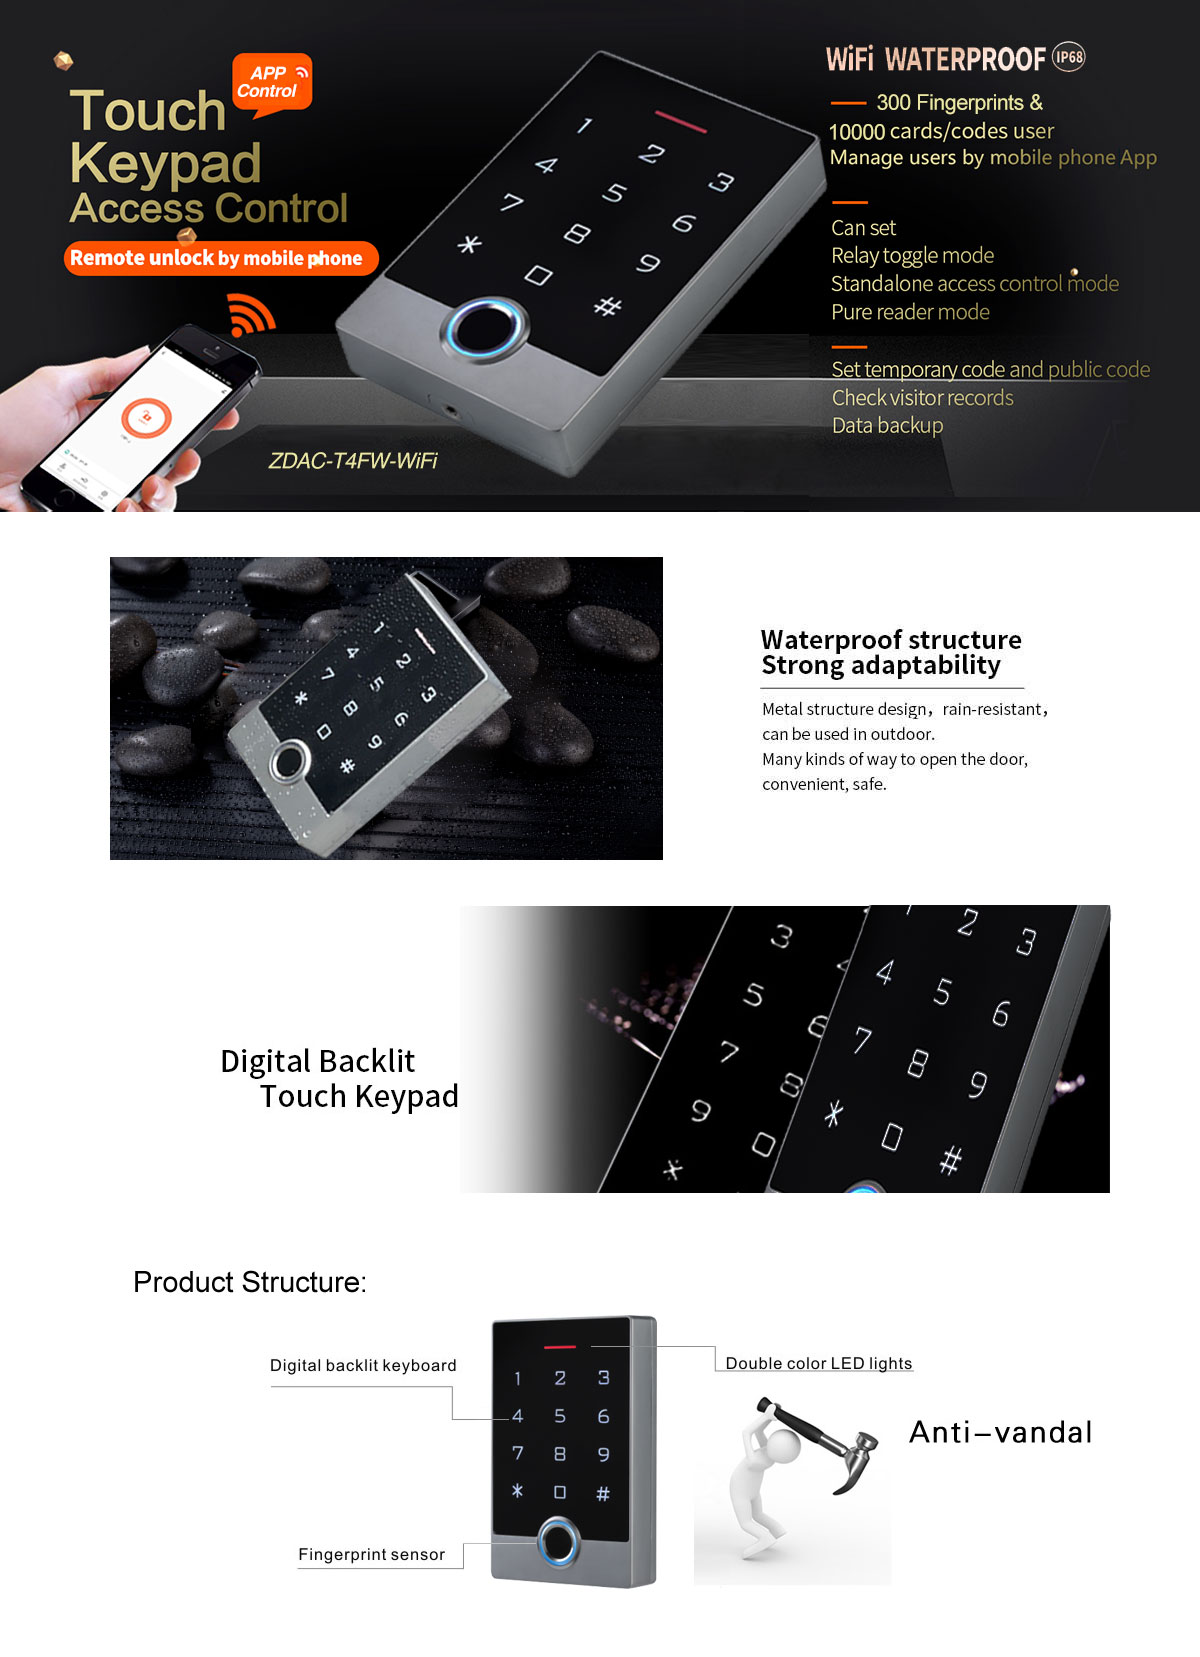 Touch Keypad Fingerprint Access Control -WiFi Optional(图1)